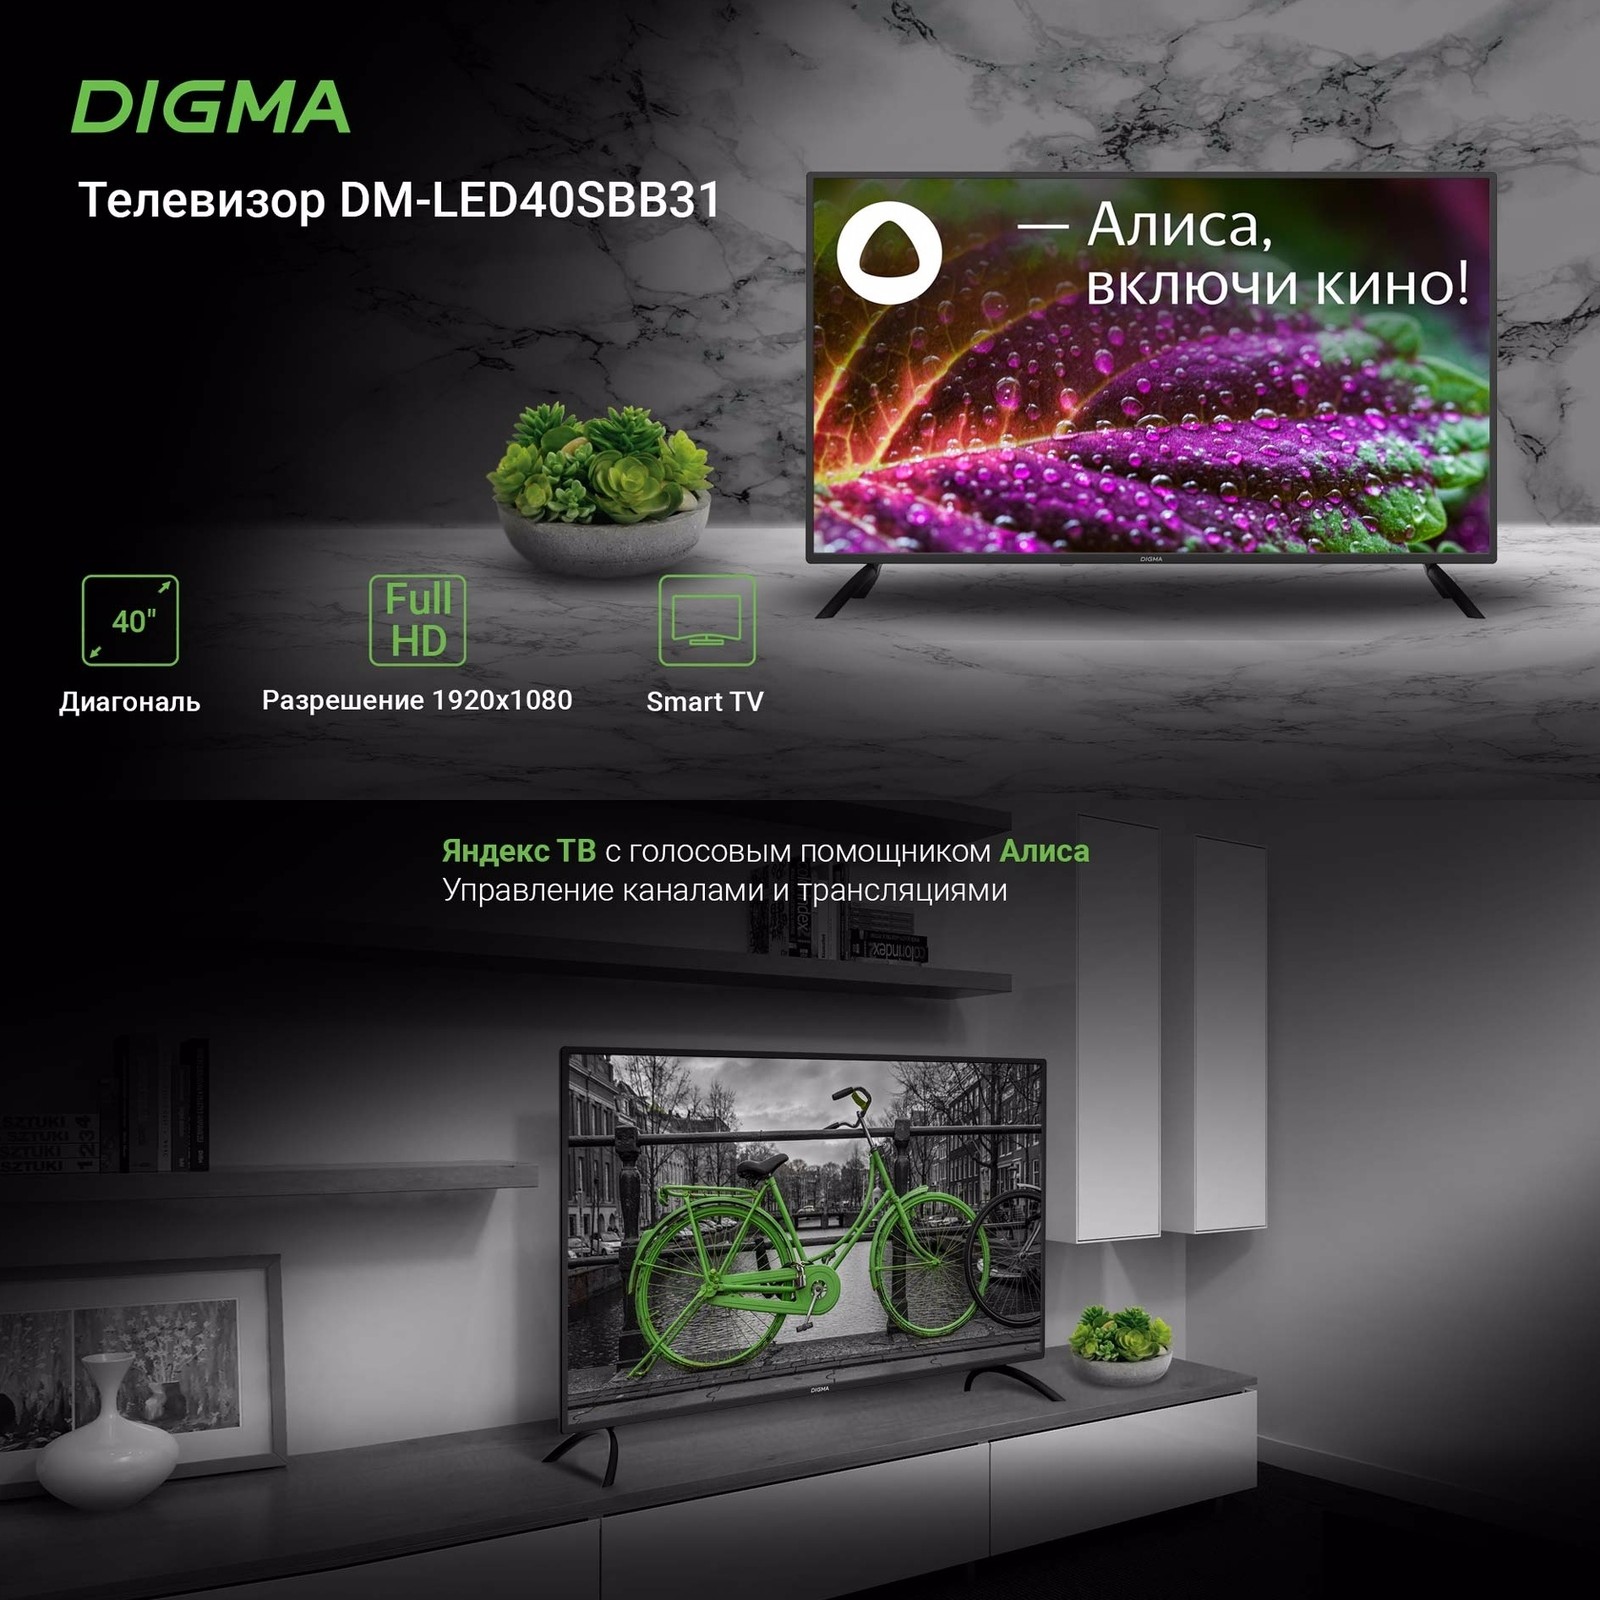 Телевизор Digma DM-LED40SBB31. Яндекс ТВ с голосовым помощником Алиса